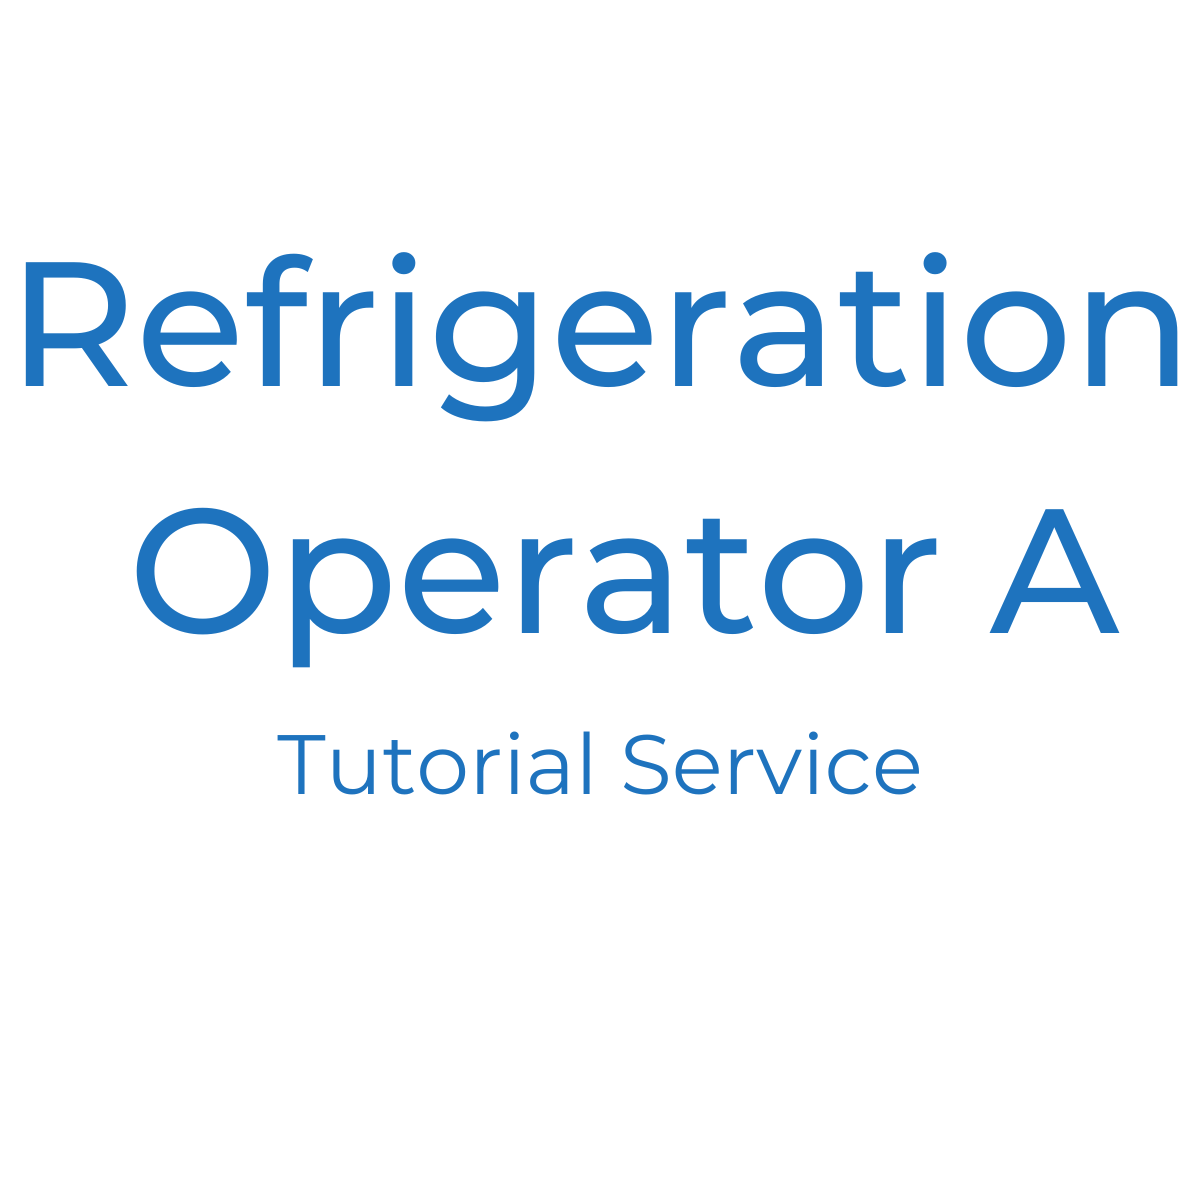 Refrigeration Operator Tutorial Service